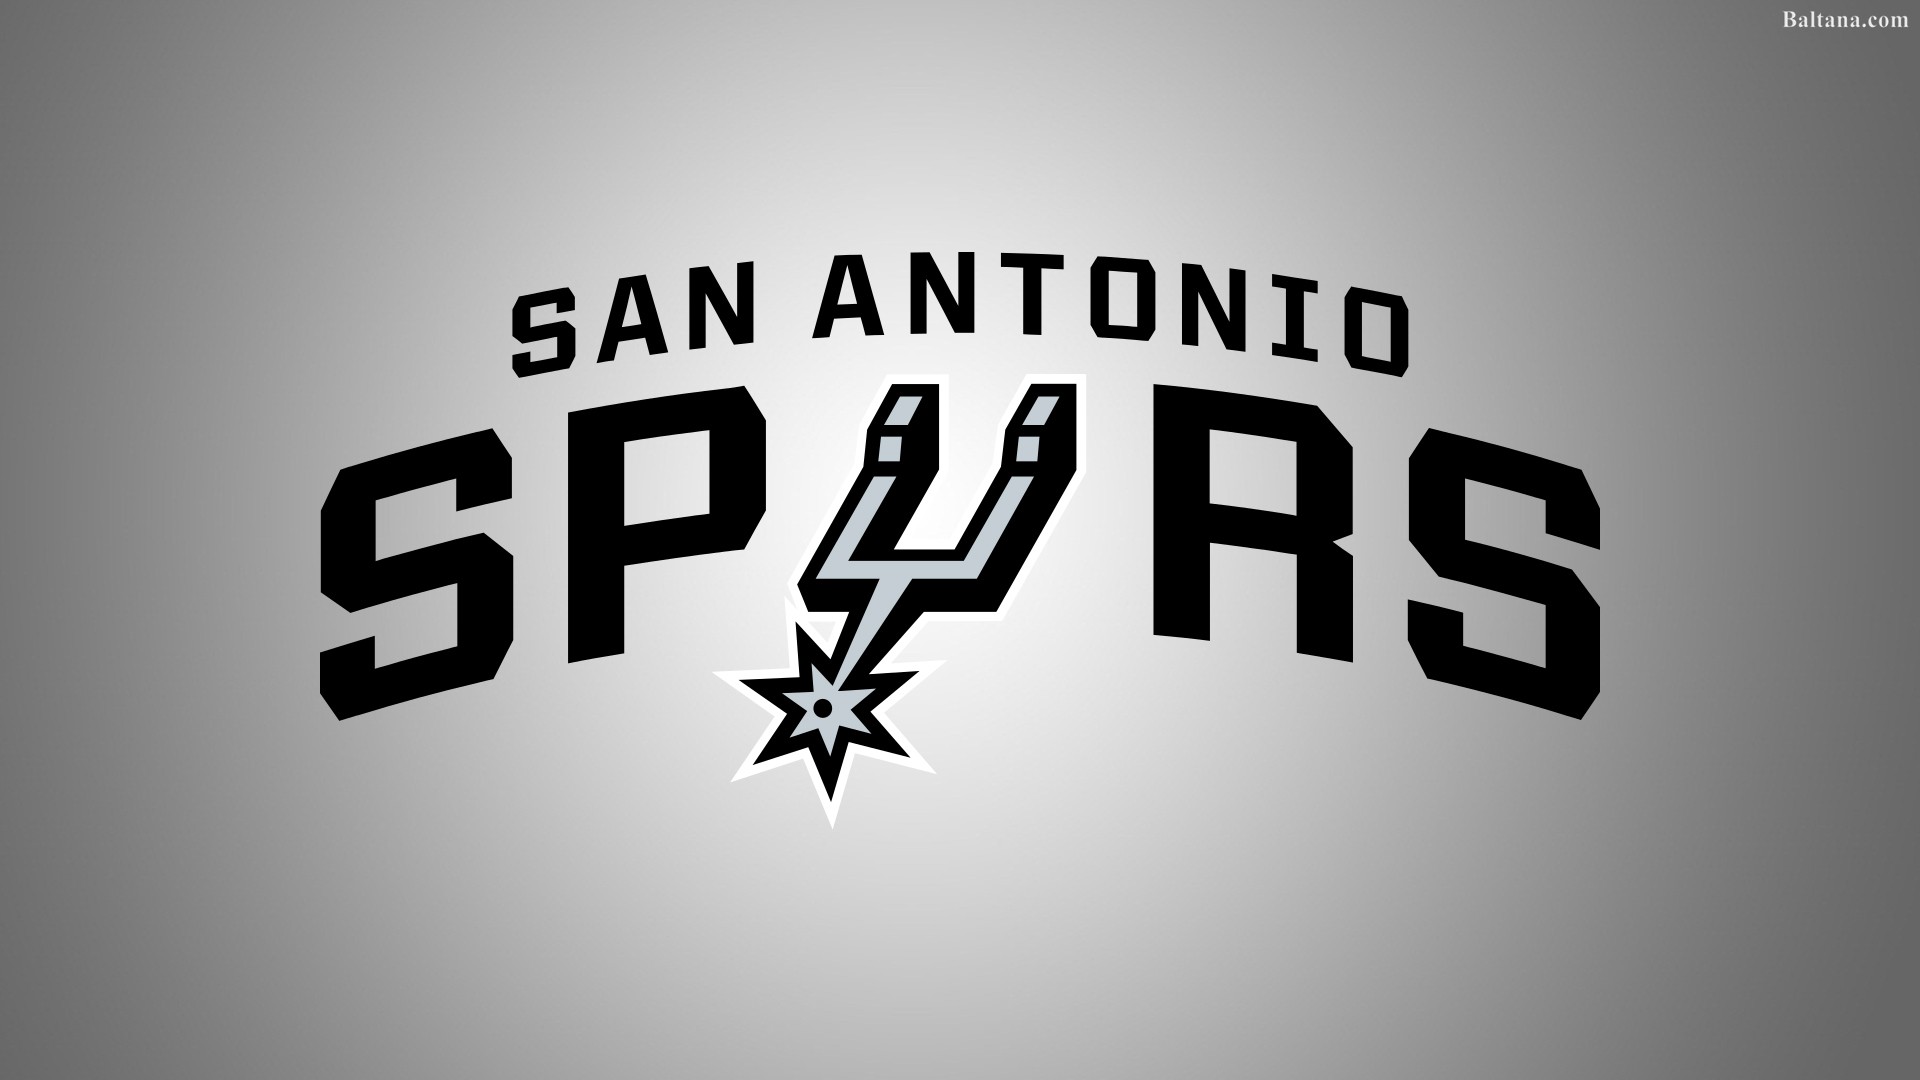 San Antonio Spurs High Definition Wallpaper 33614